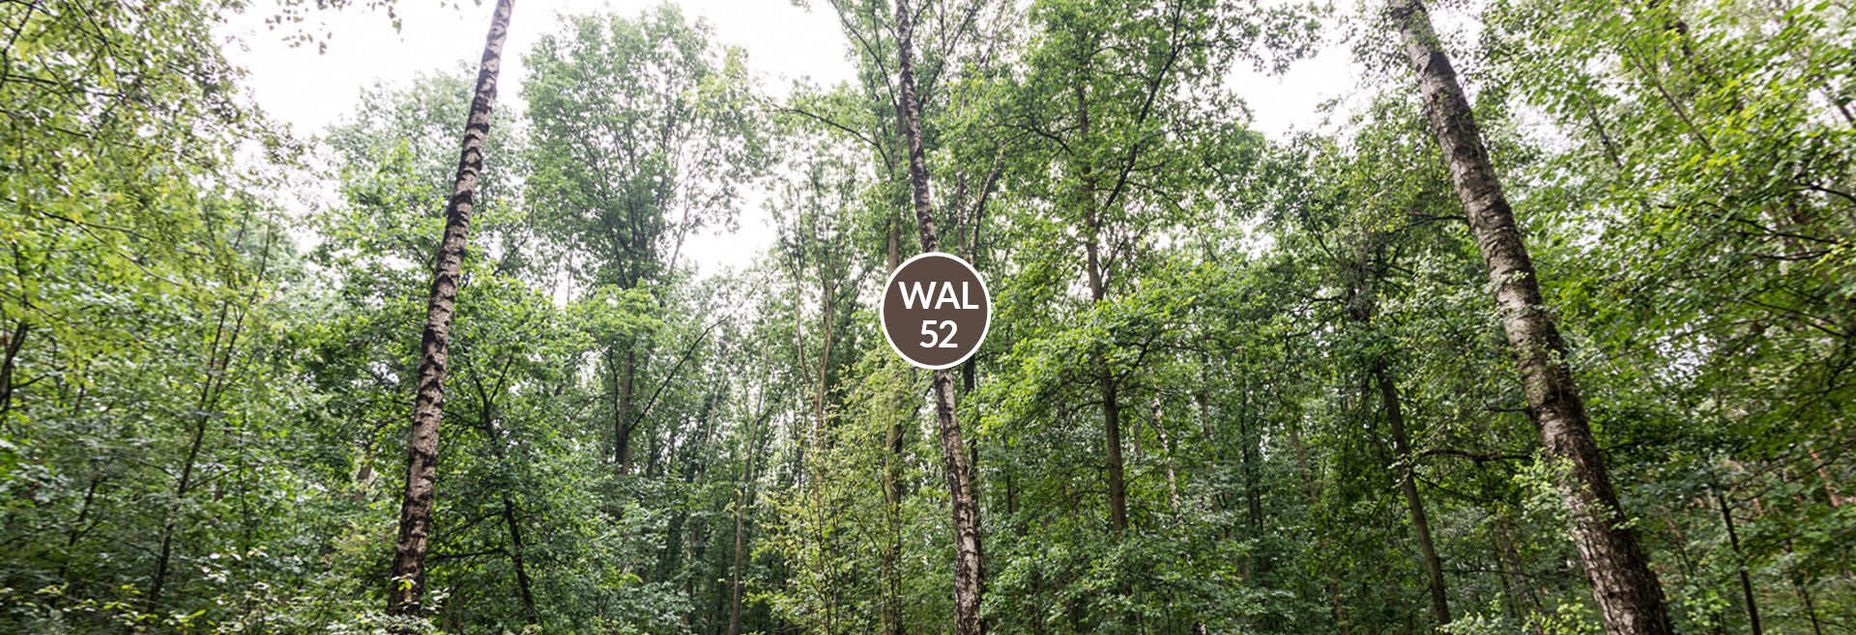 FriedWald-Onlineshop WAL 52